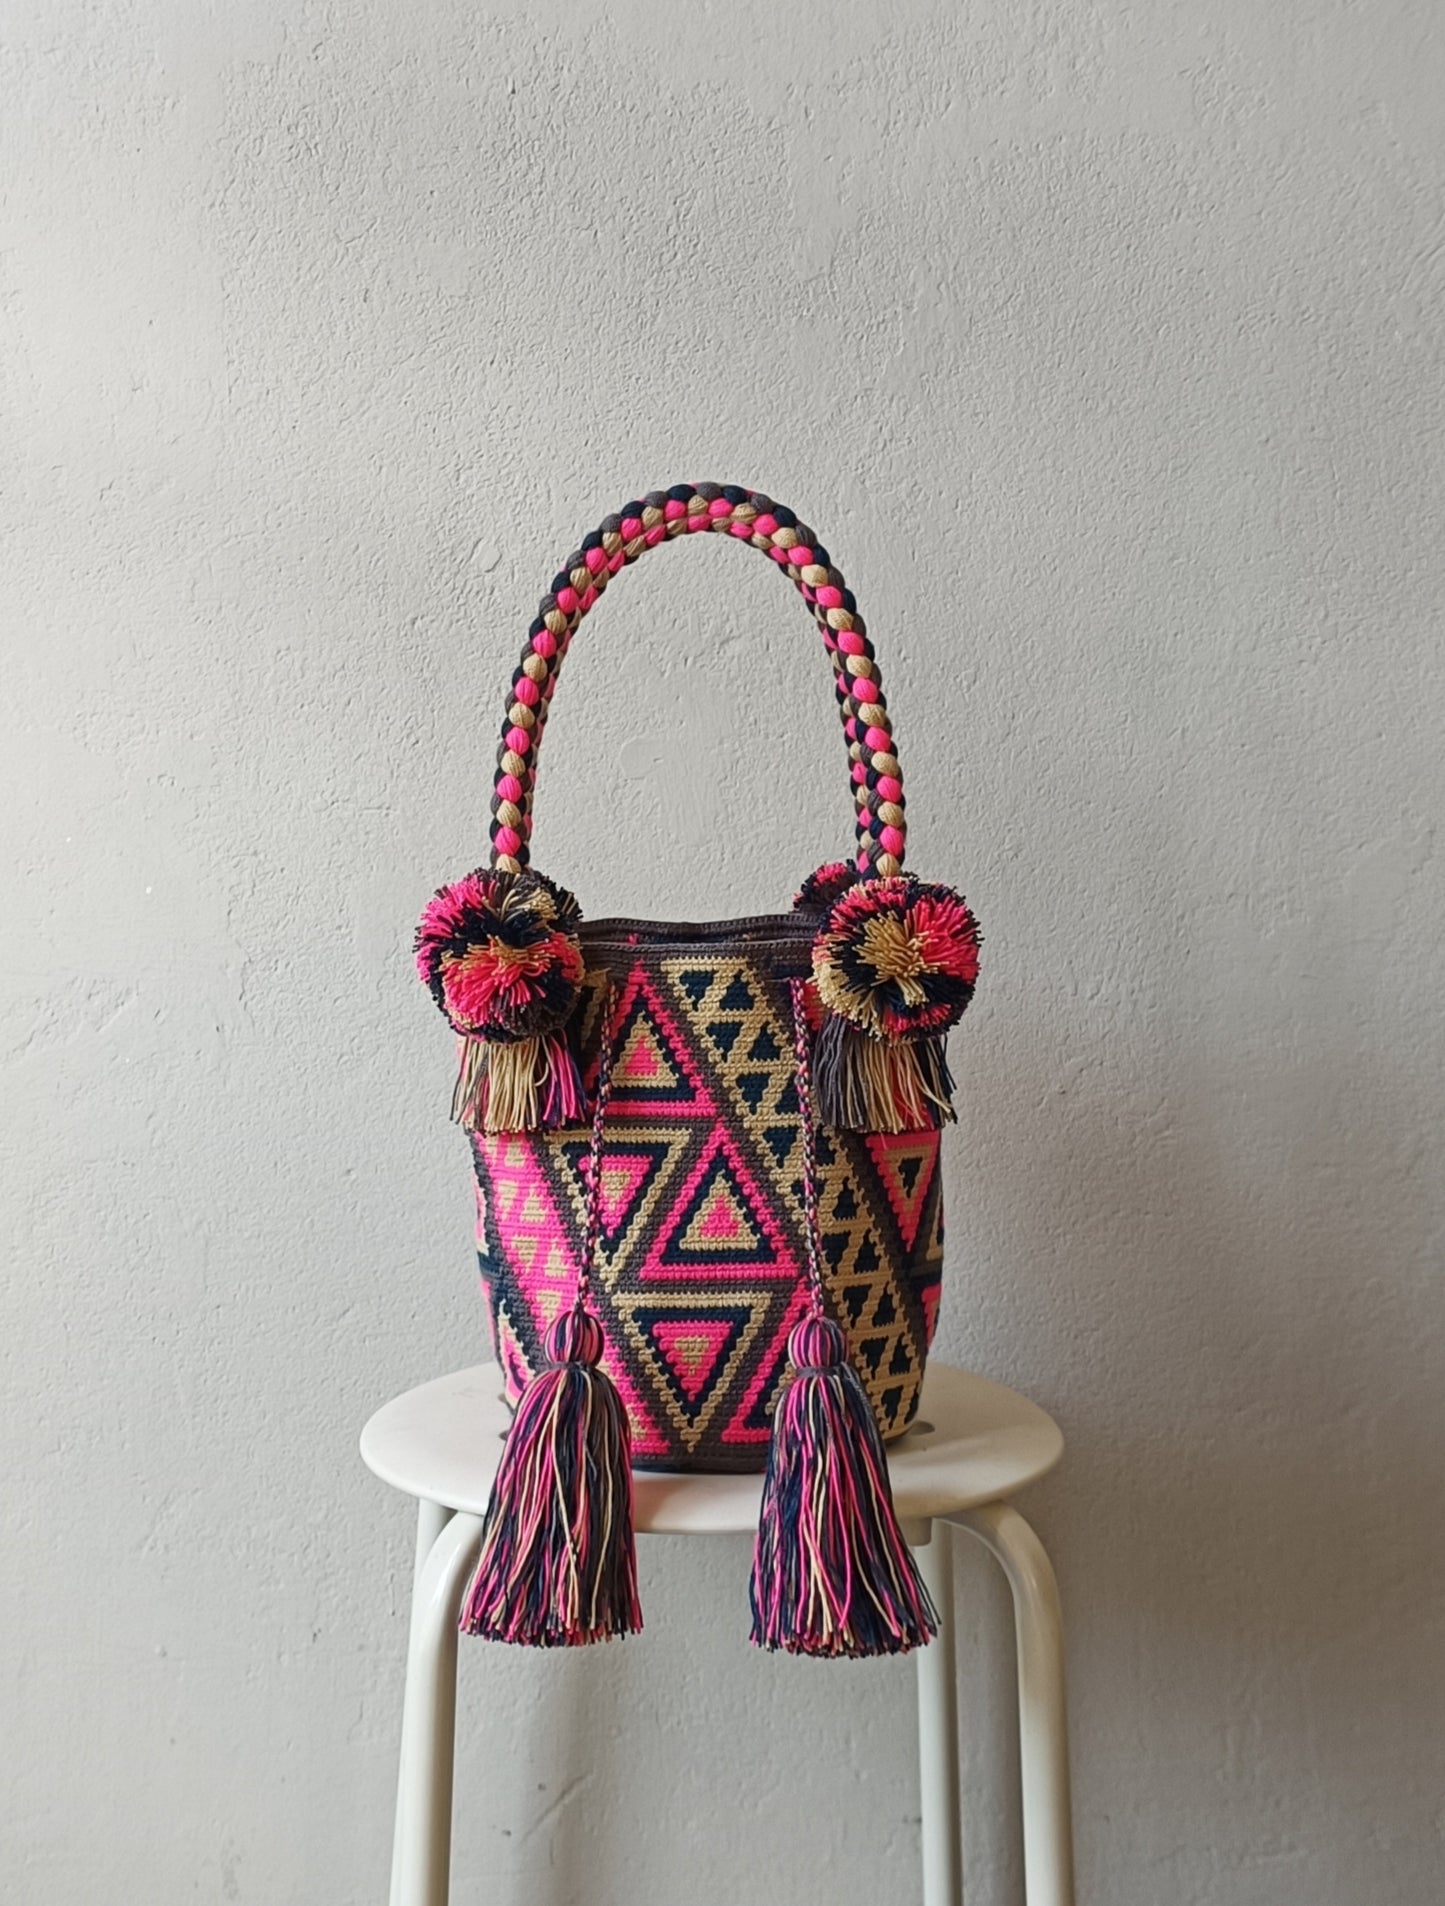 Mochila handbag M dark gray and pink